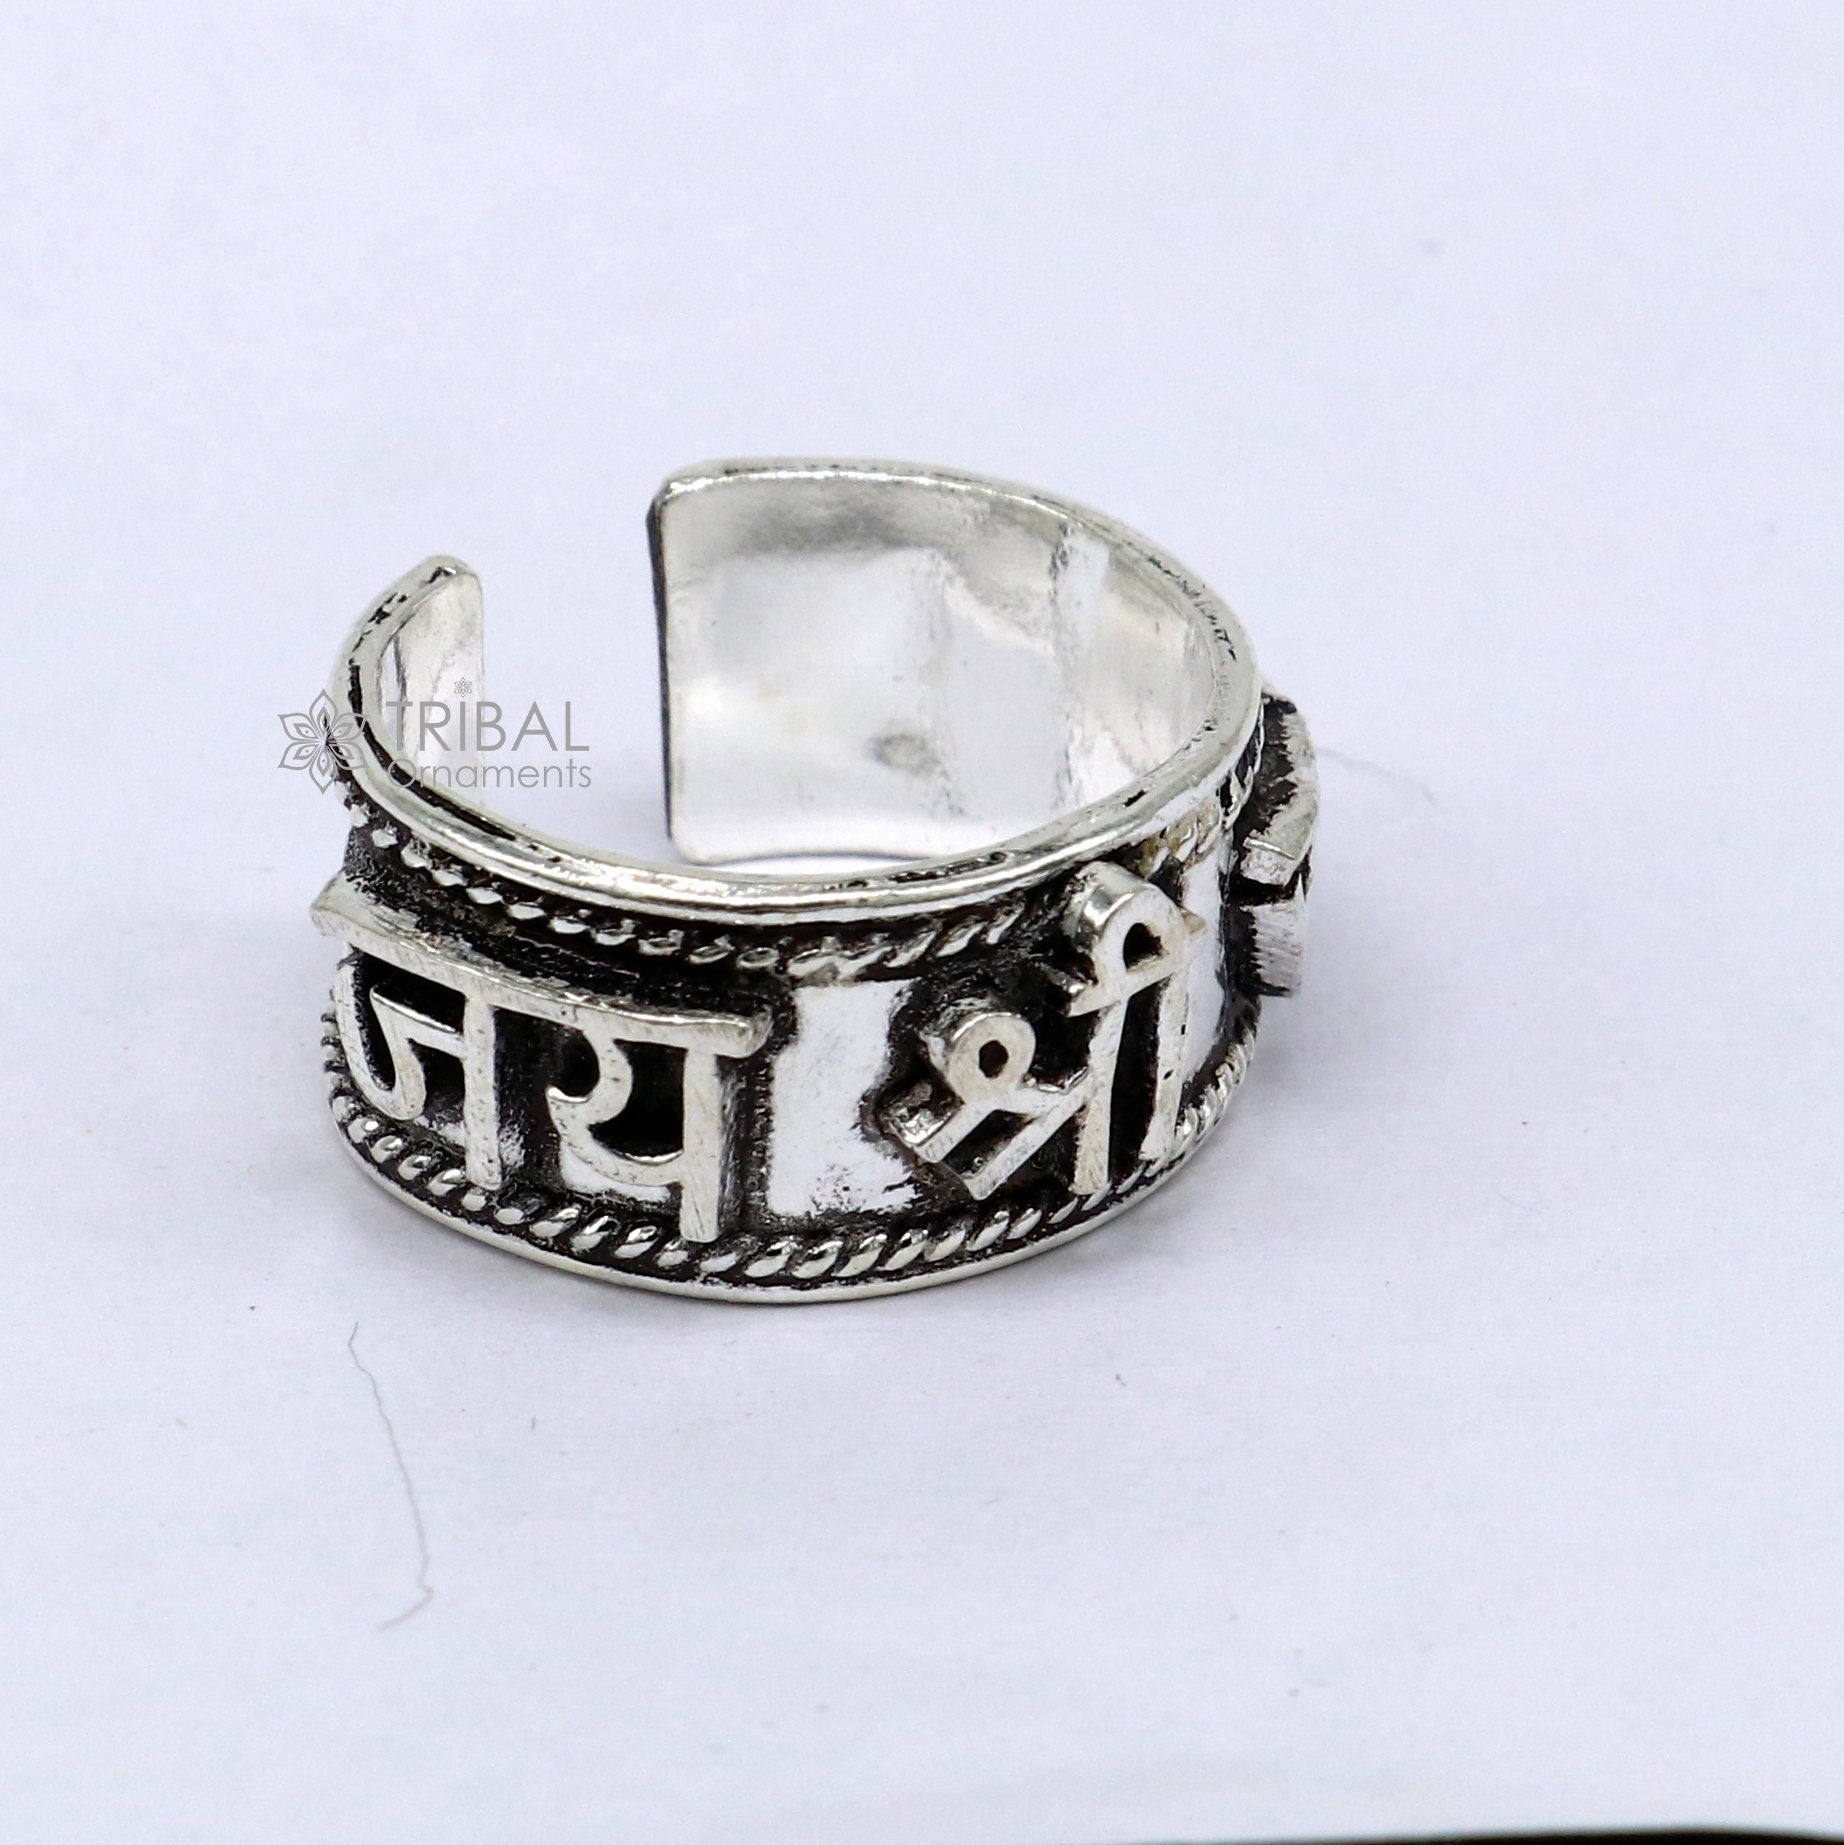 925 sterling silver 11mm wide solid handmade Adjustable idol Rama mantra "Jai Shri Ram" ring band, thumb ring classical jewelry sr381 - TRIBAL ORNAMENTS